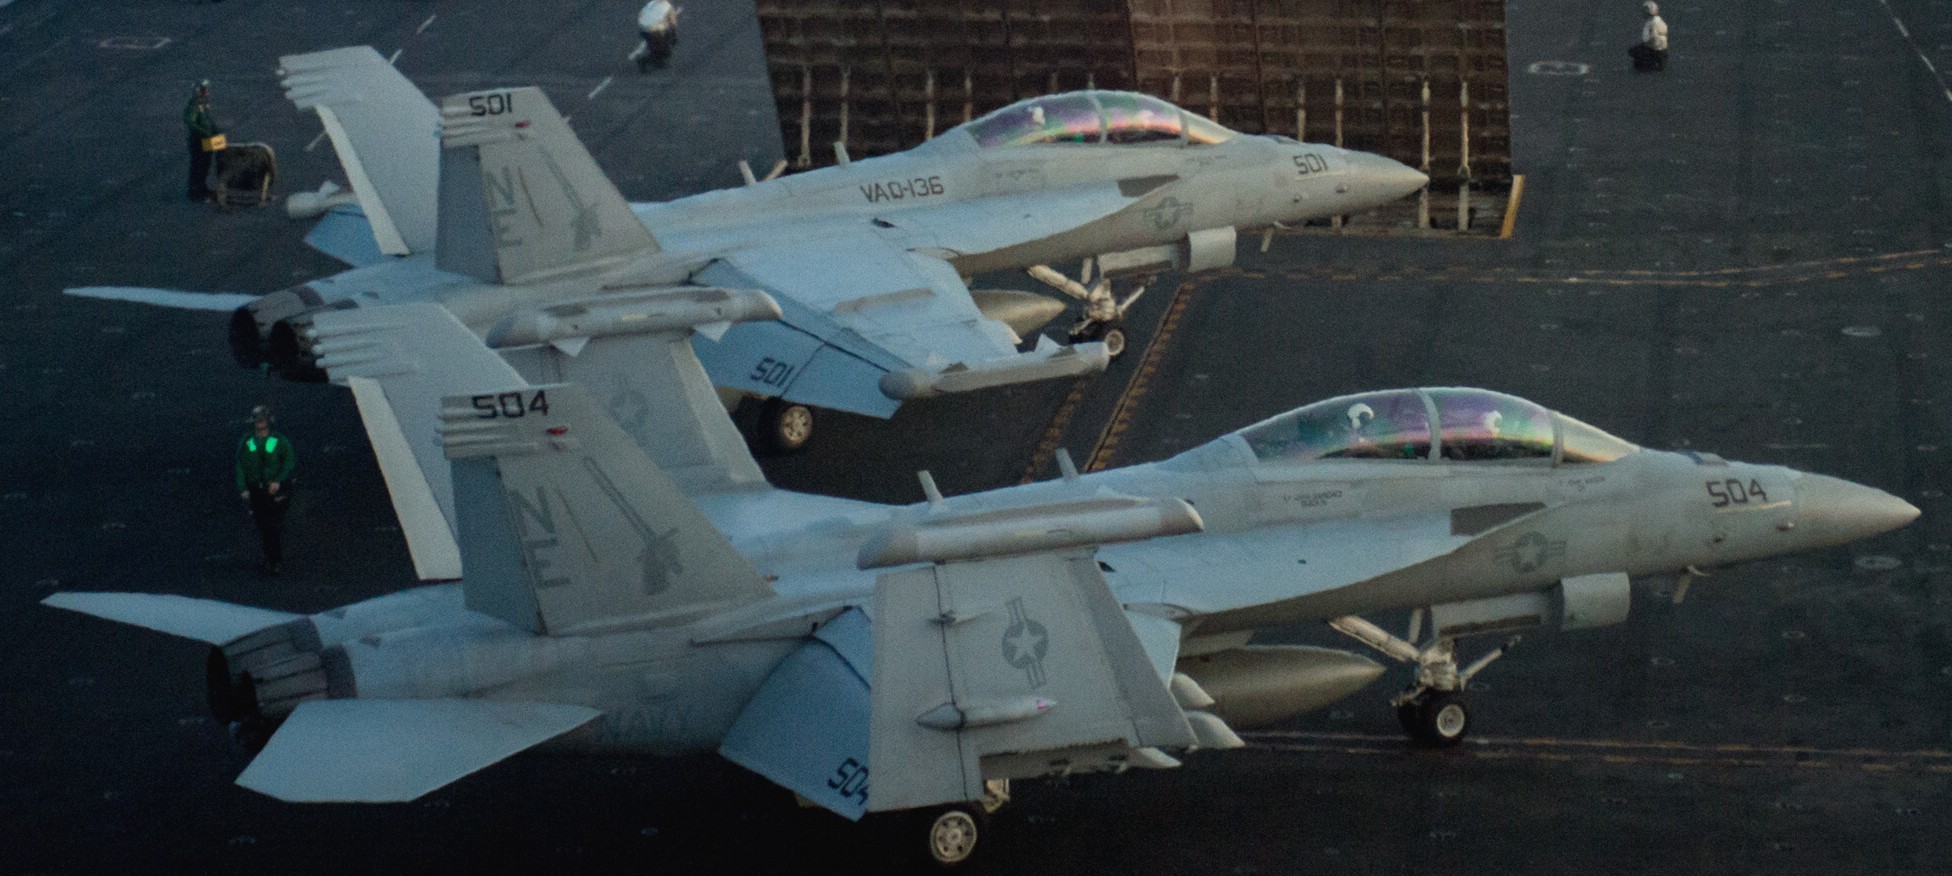 vaq-136 gauntlets electronic attack squadron vaqron us navy ea-18g growler carrier air wing cvw-2 uss carl vinson cvn-70 105